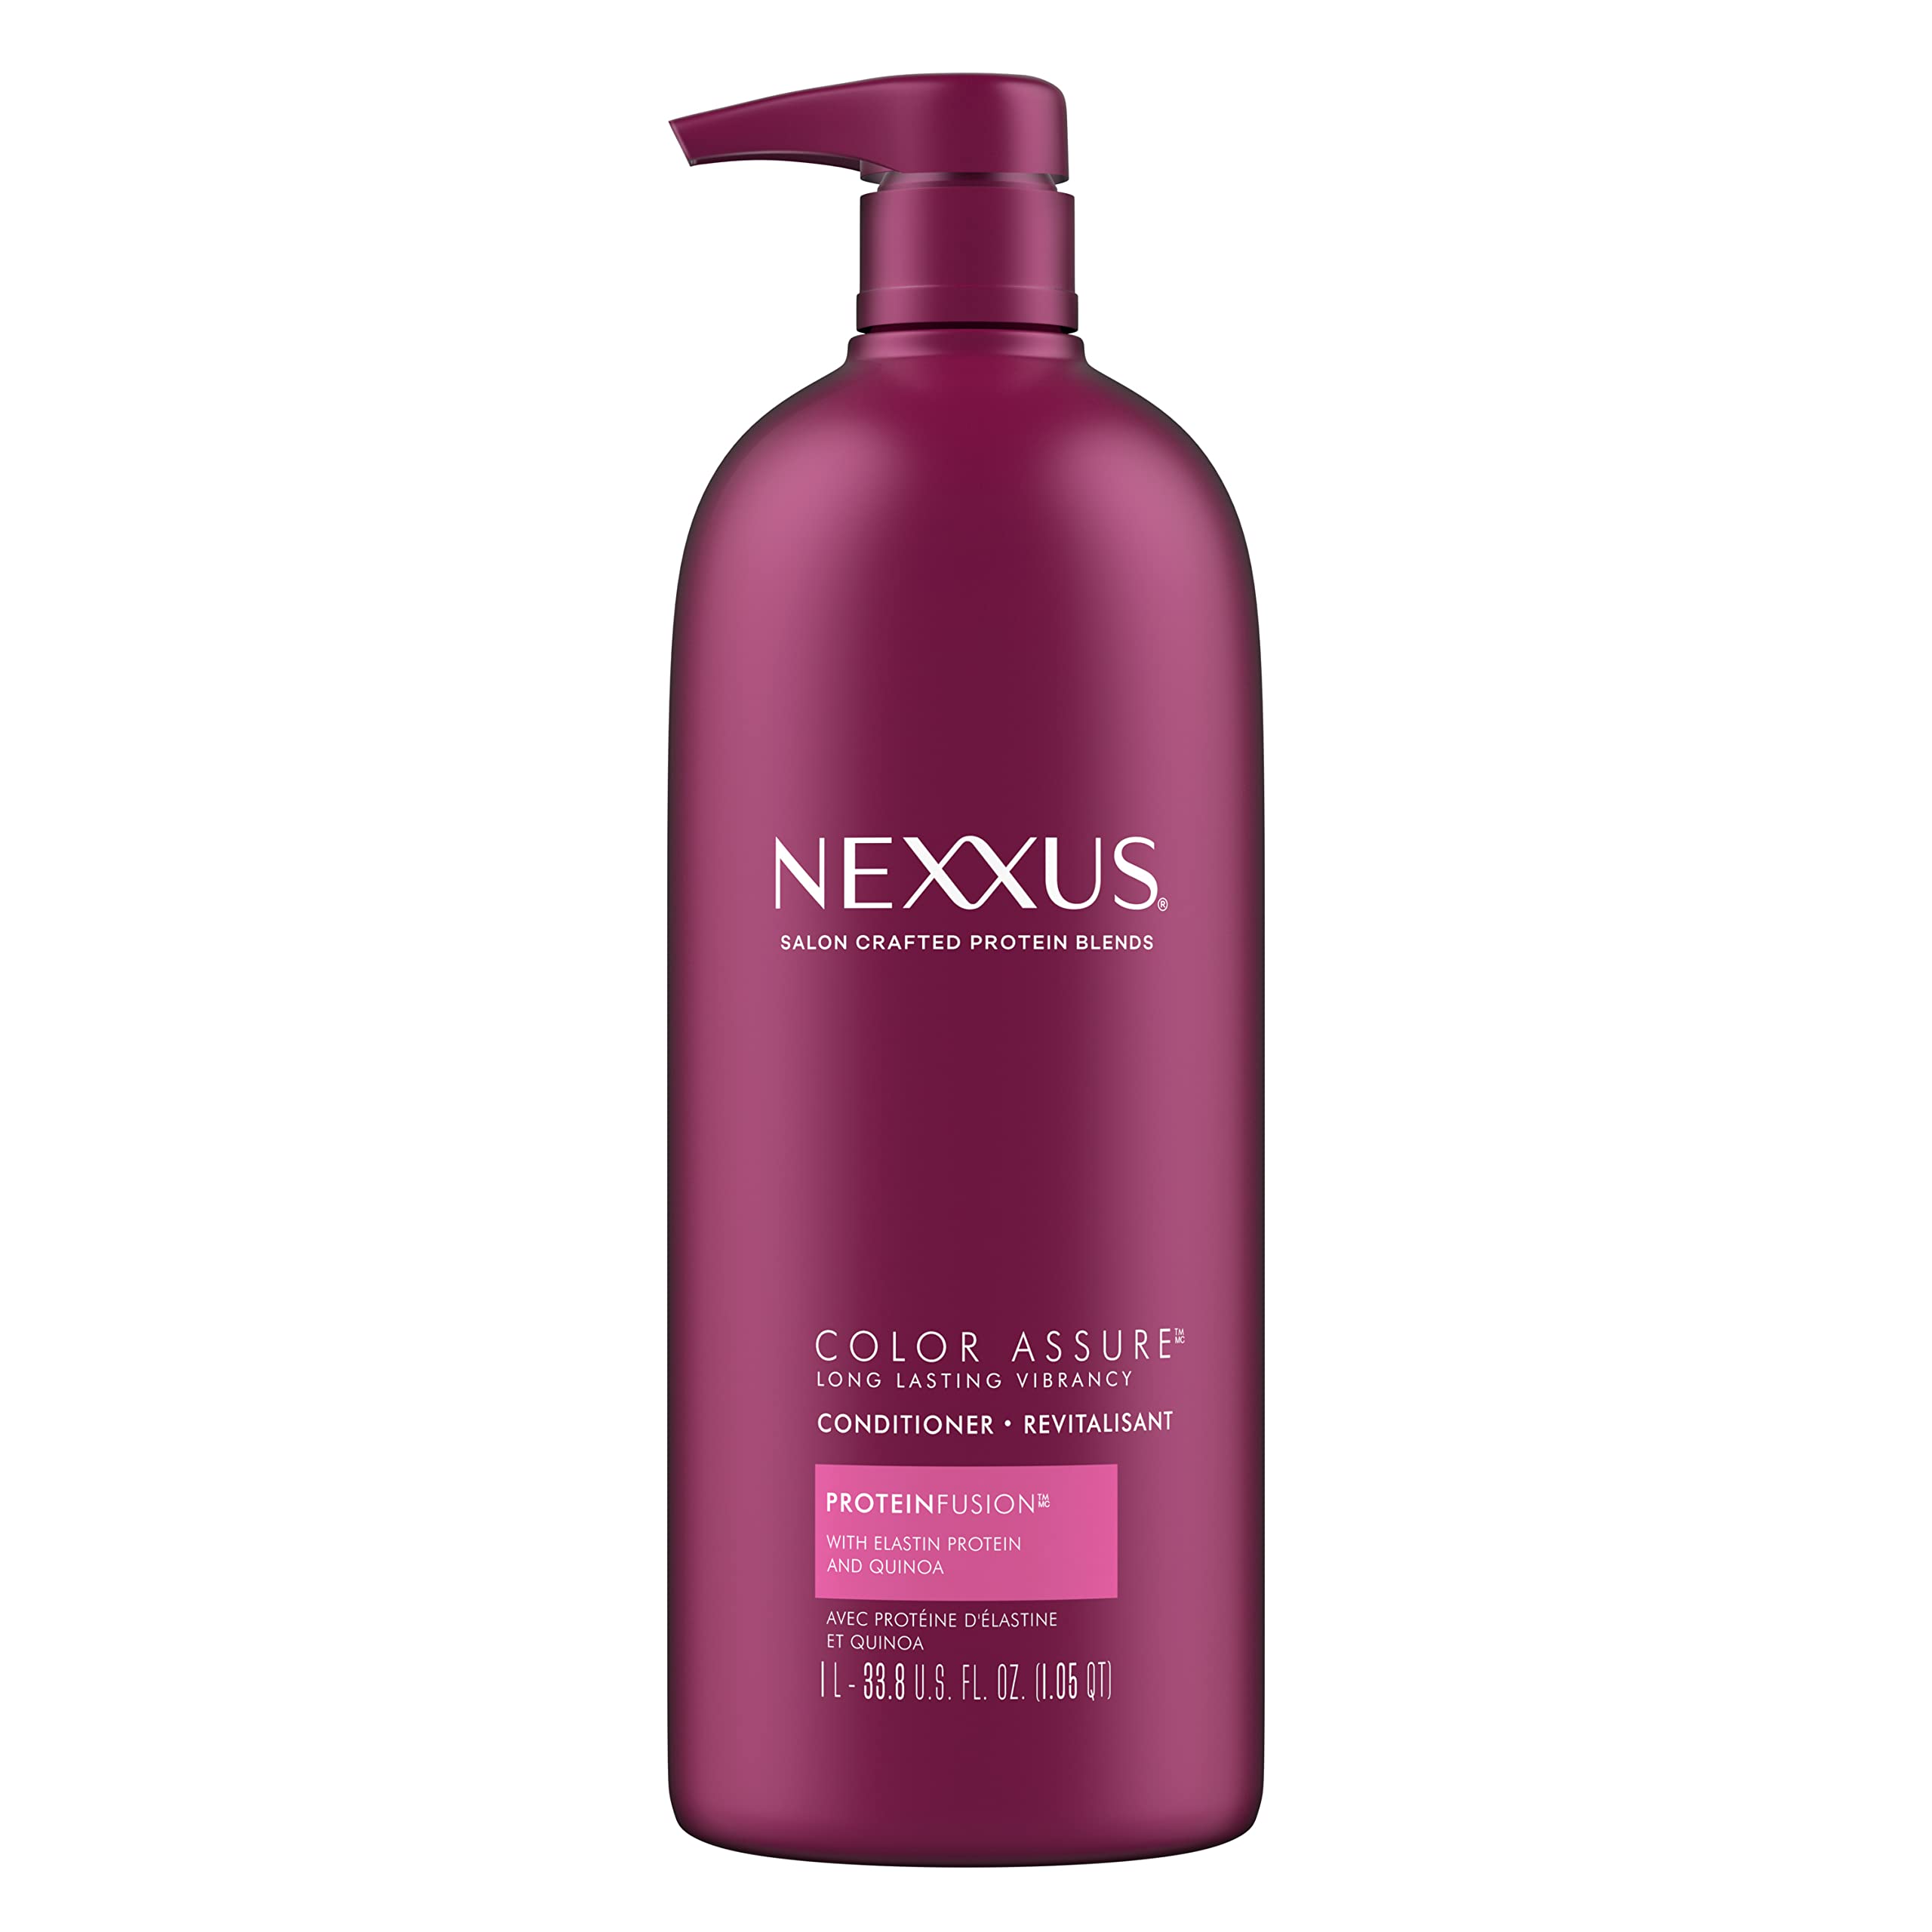 Nexxus Hair Color Assure Conditioner with ProteinFusion, For Color Treated Hair Color Hair Conditioner 33.8 oz